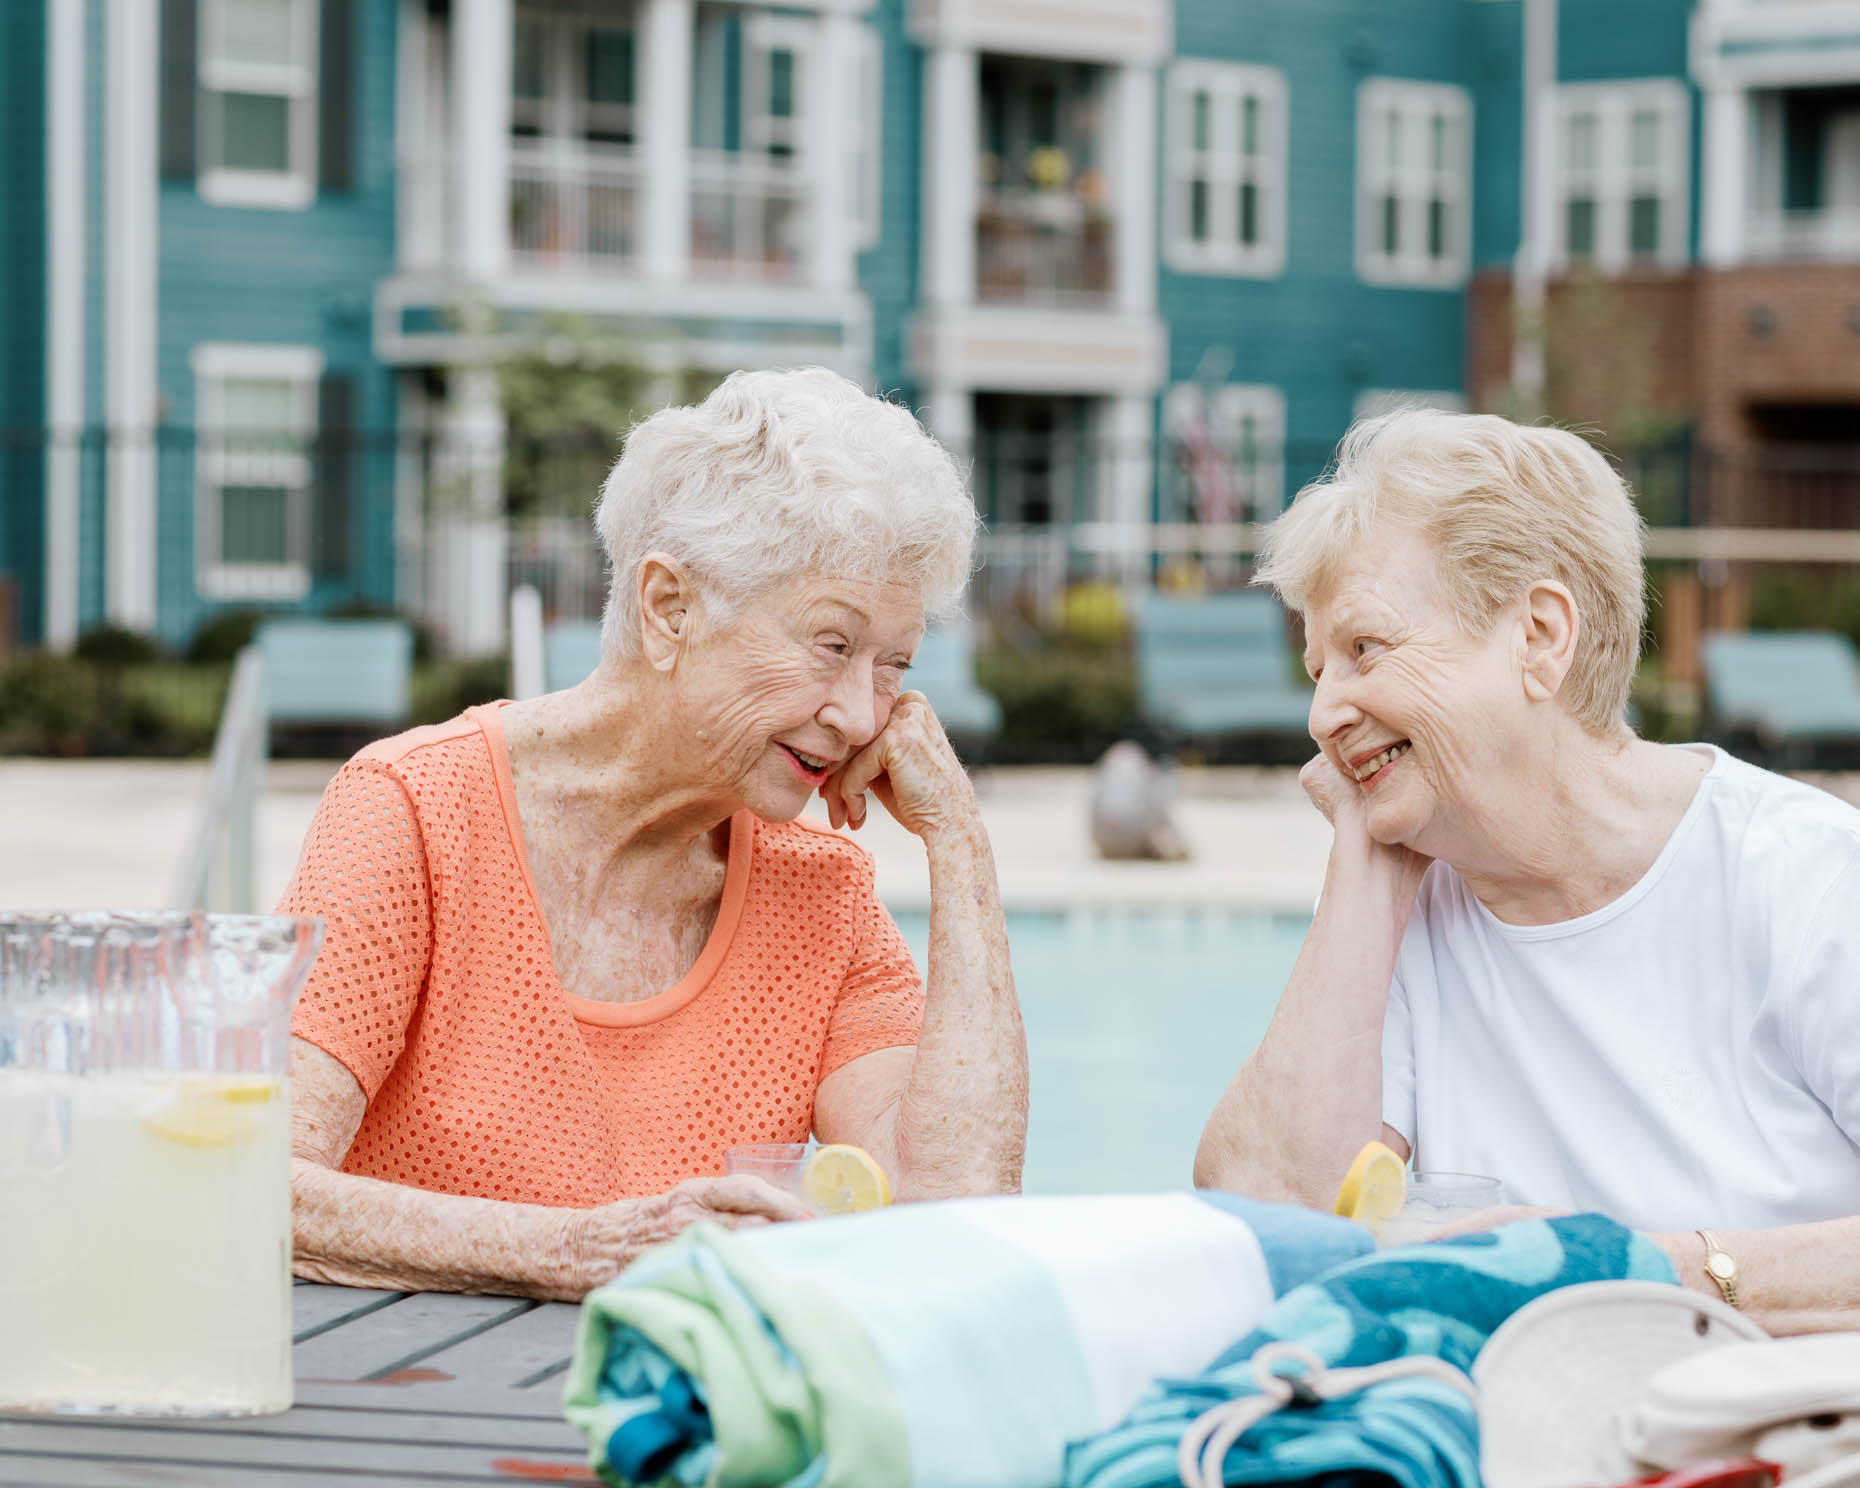 Two retired women talking poolside at a senior living community